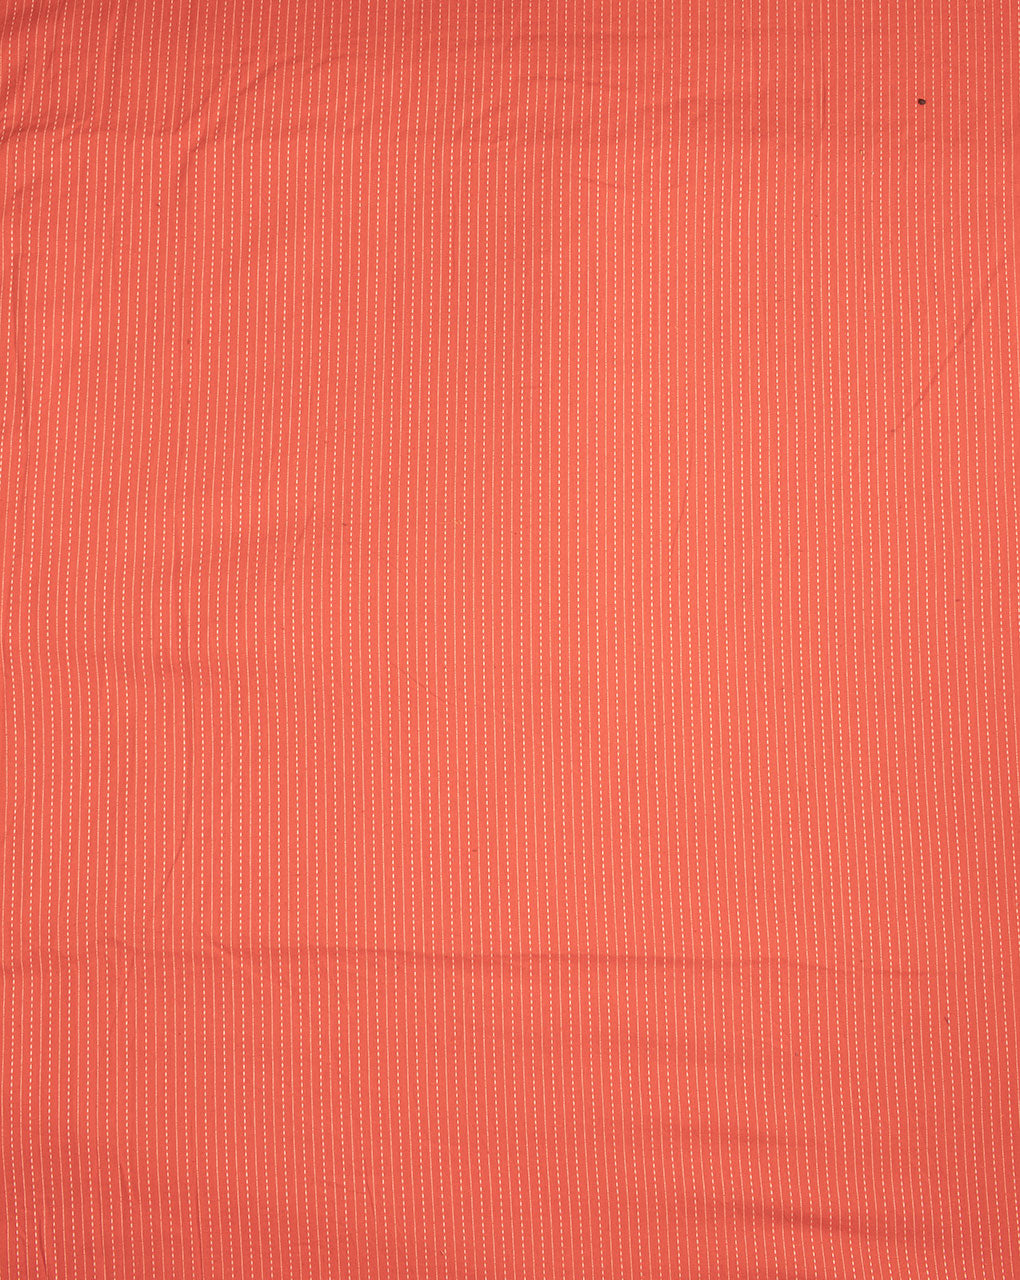 Orange Plain Kantha Cotton Fabric - Fabriclore.com